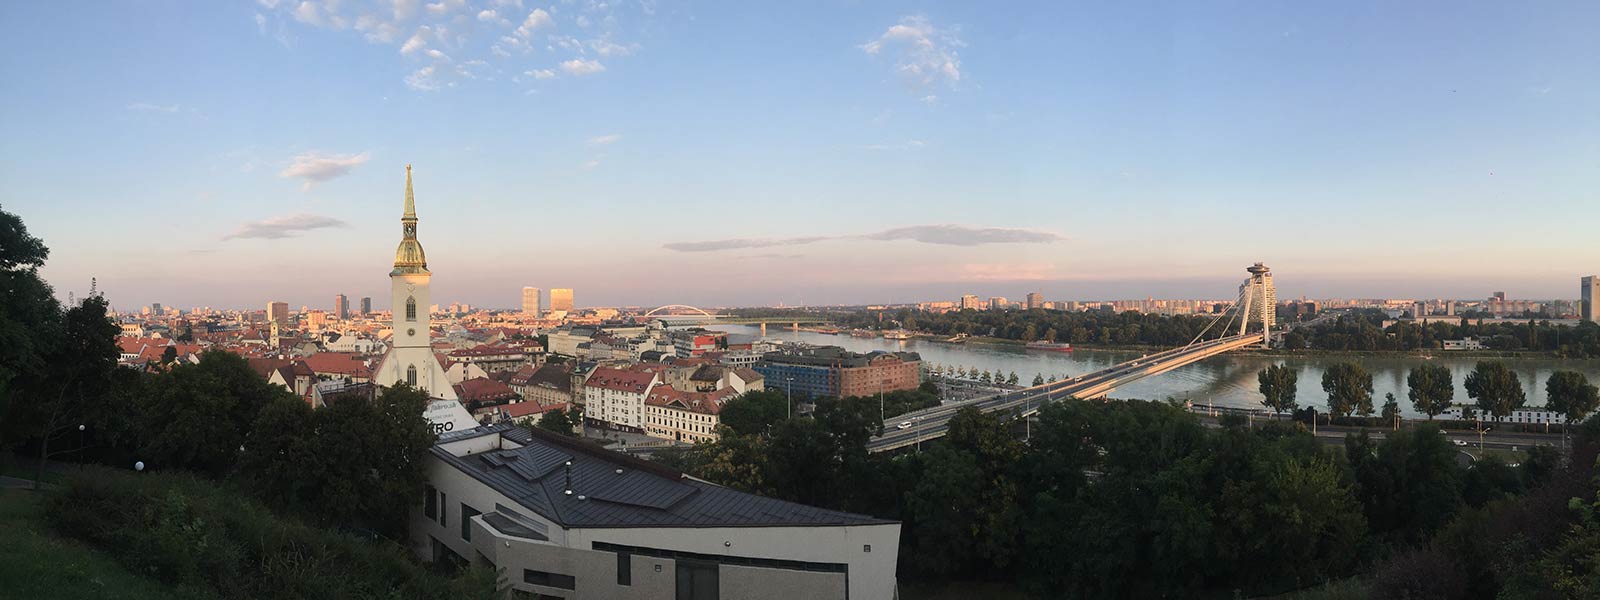 Rooftops and bridge in Bratislava, Slovakia. My Eastern European trip summed up in photos